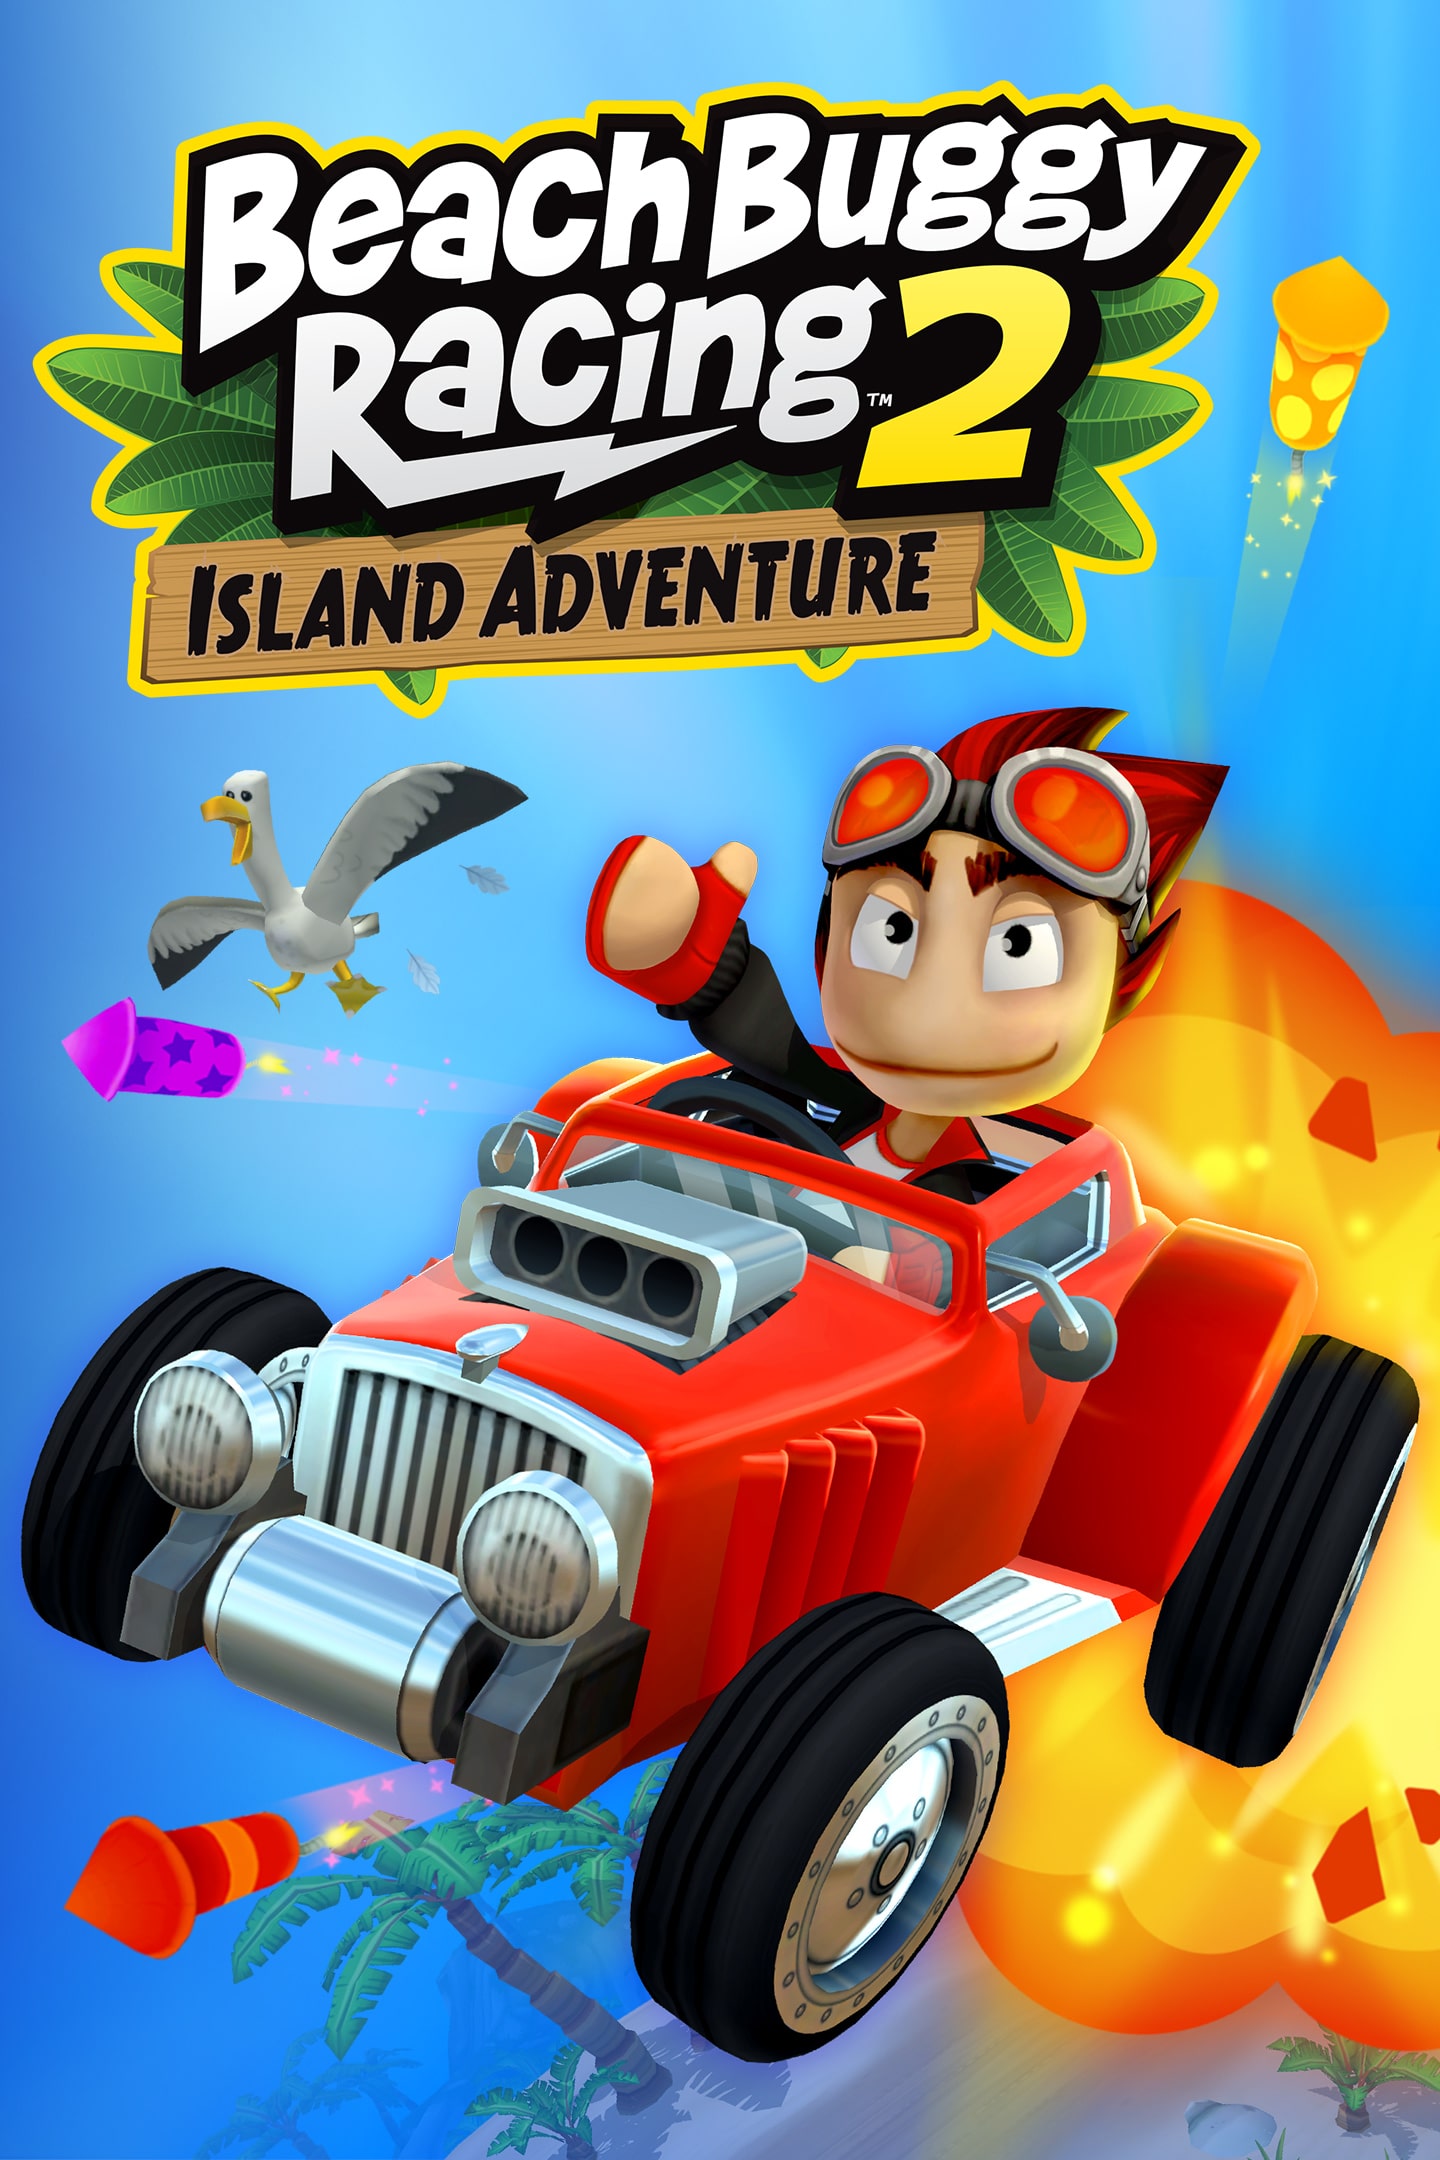 Ensomhed vente omvendt Beach Buggy Racing 2: Island Adventure